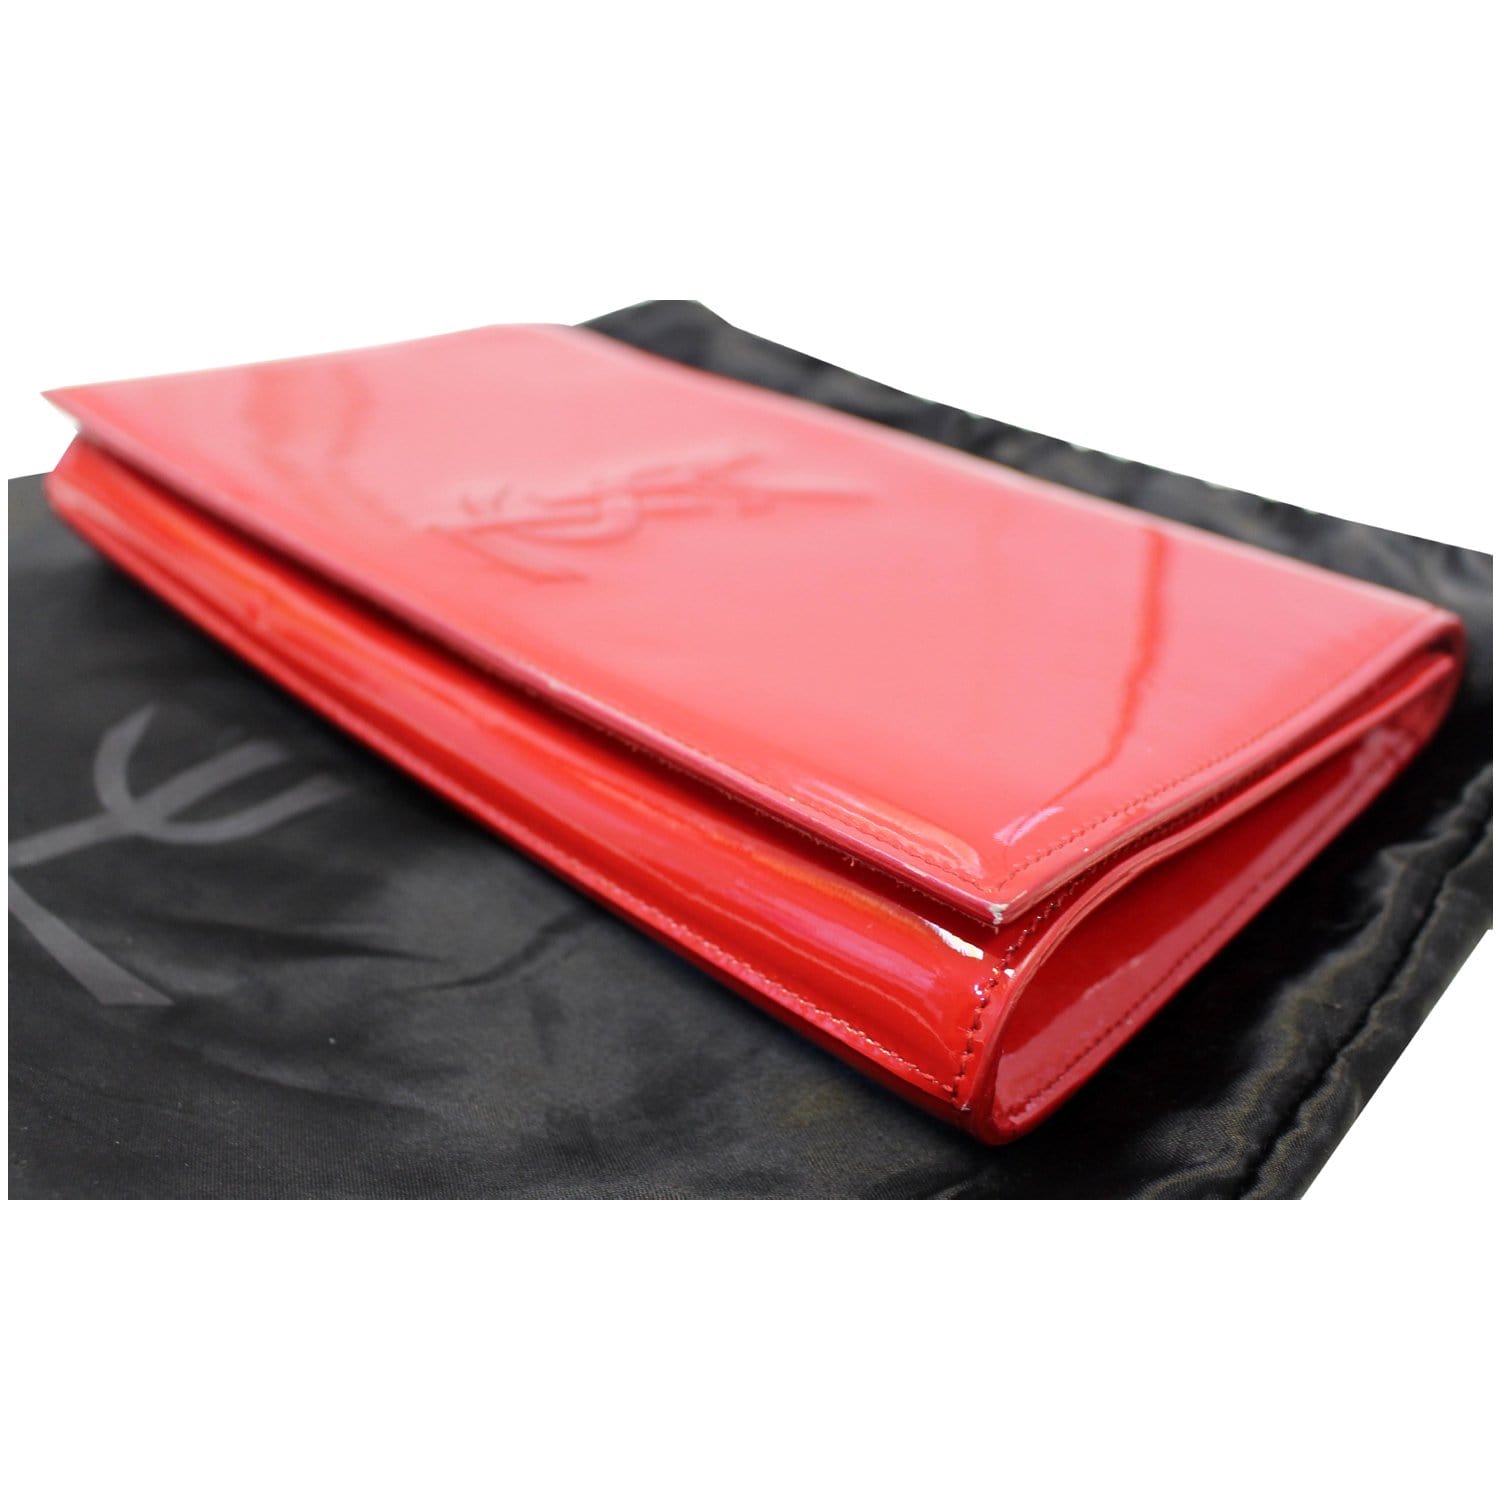 Saint Laurent - Authenticated Bellechasse Handbag - Leather Red Plain for Women, Very Good Condition